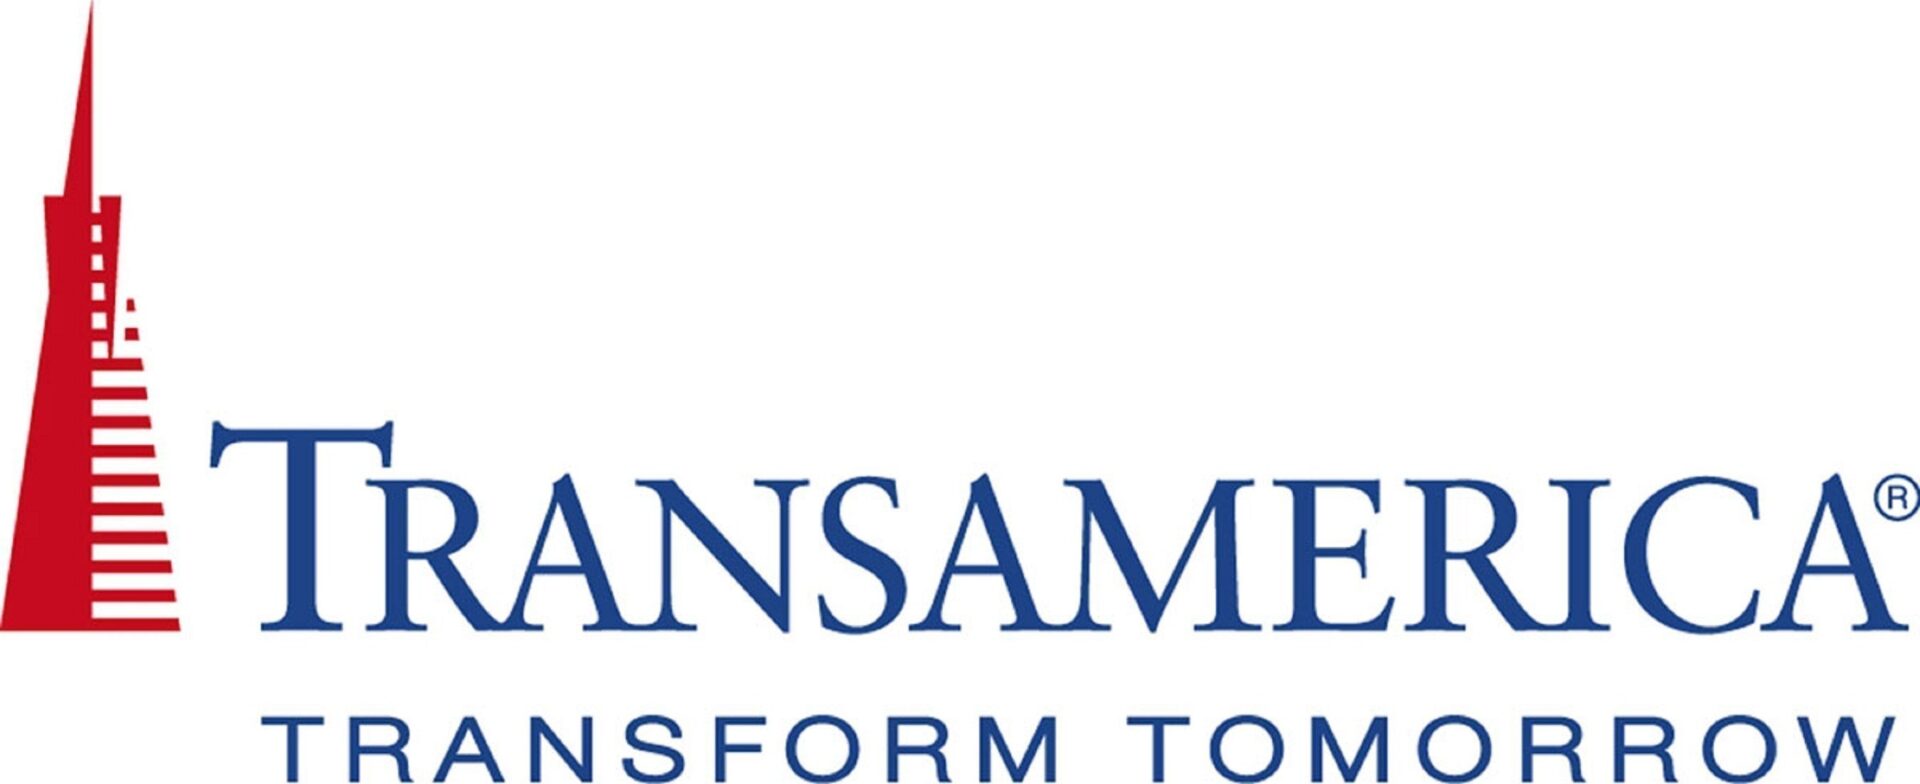 A blue and white logo of the transamento company.